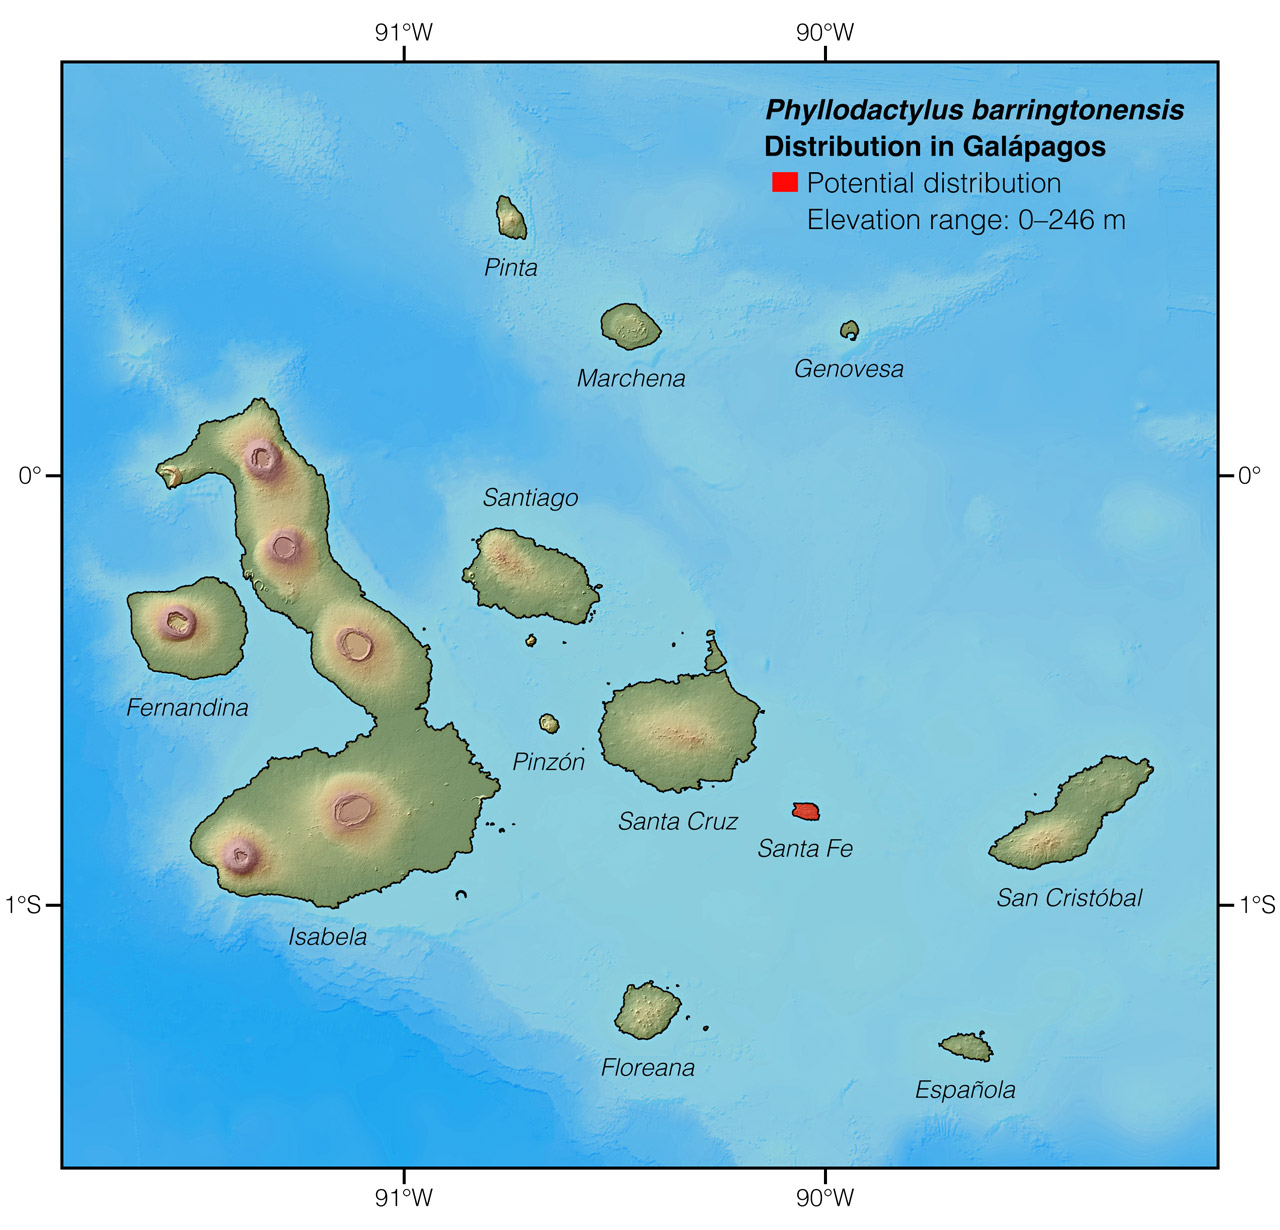 Distribution of Phyllodactylus barringtonensis in Galápagos